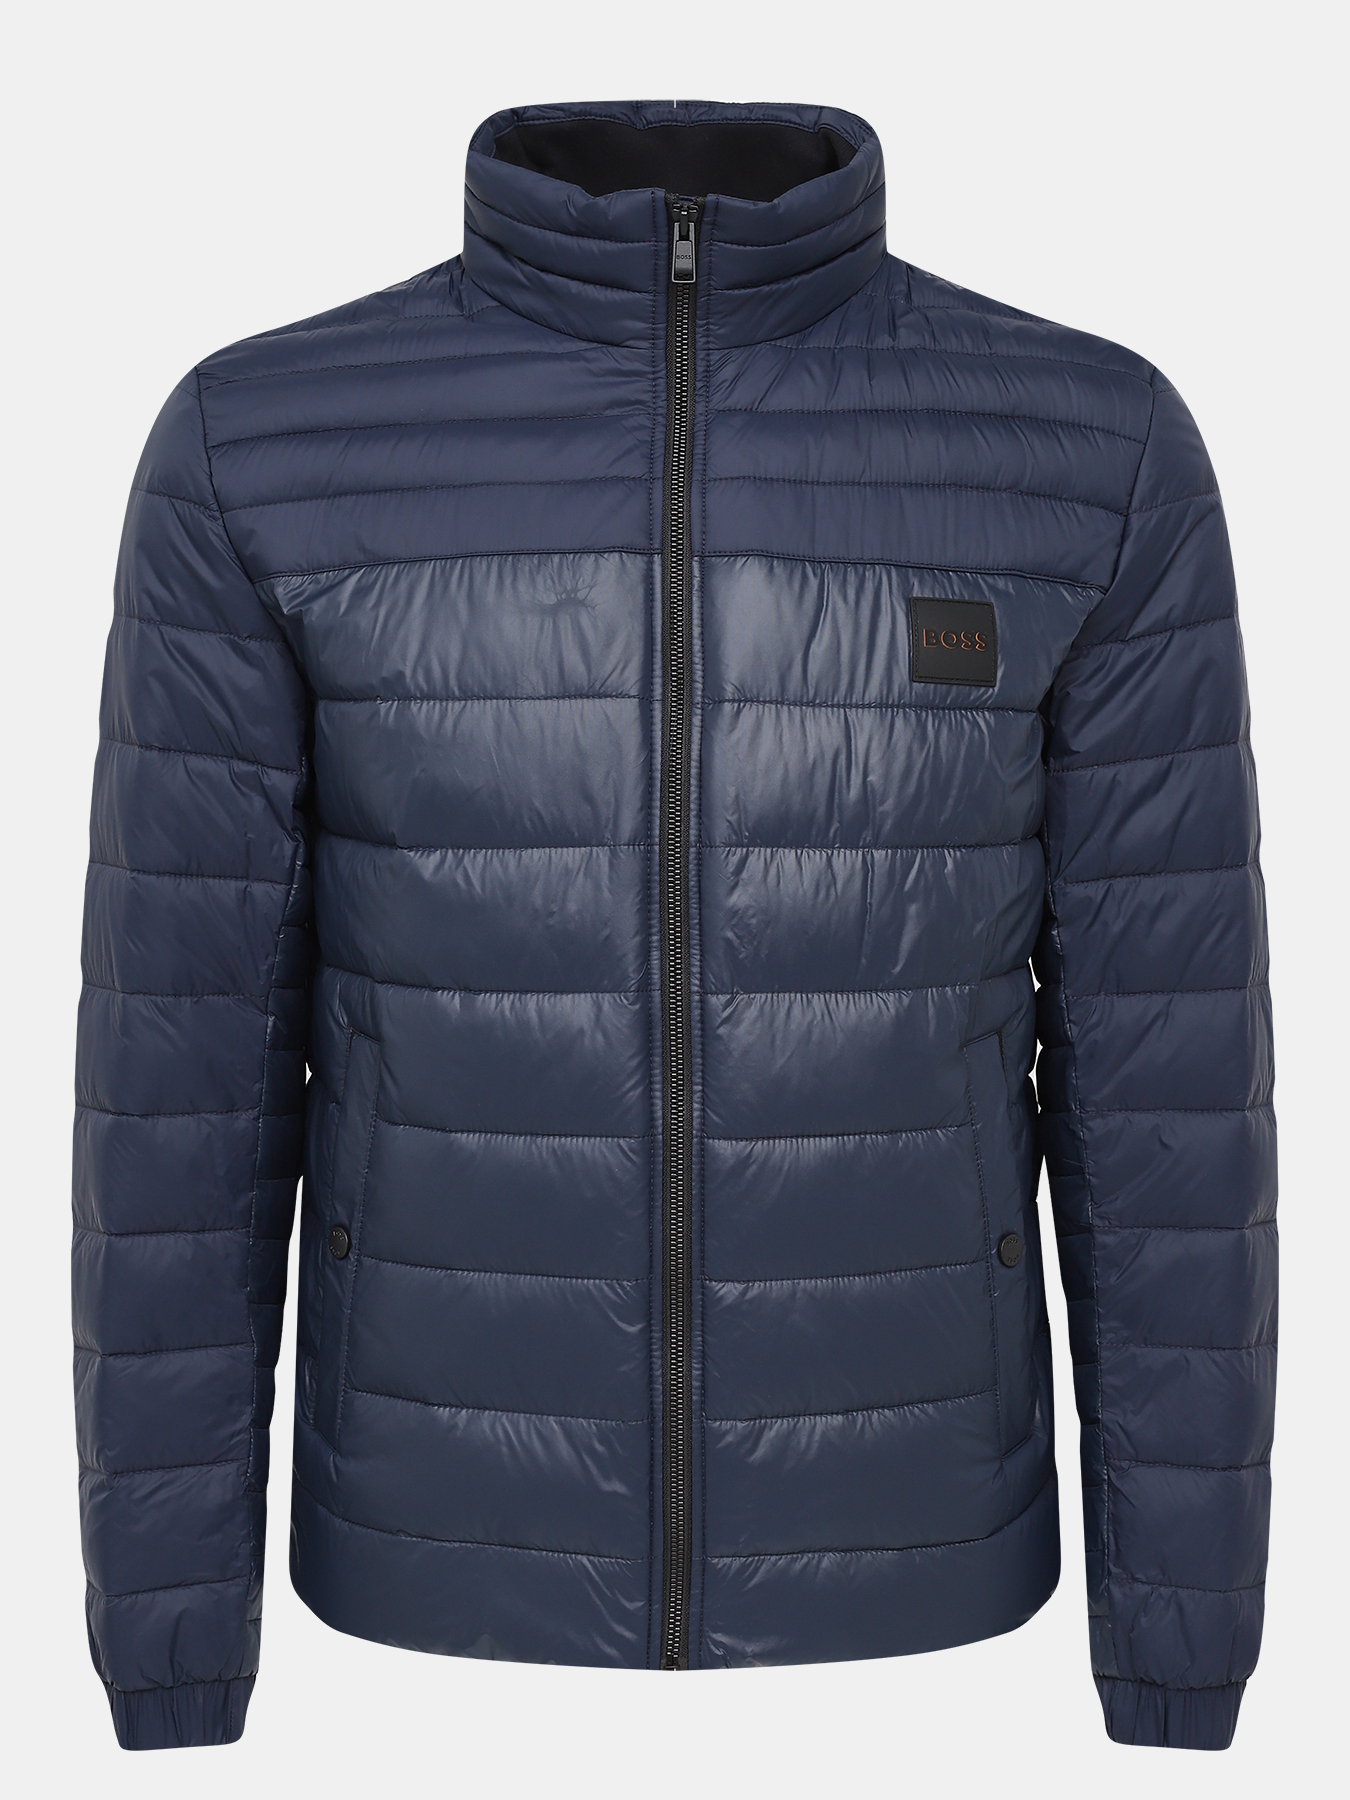 Куртка Oden BOSS 434079-028, цвет темно-синий, размер 54 - фото 1